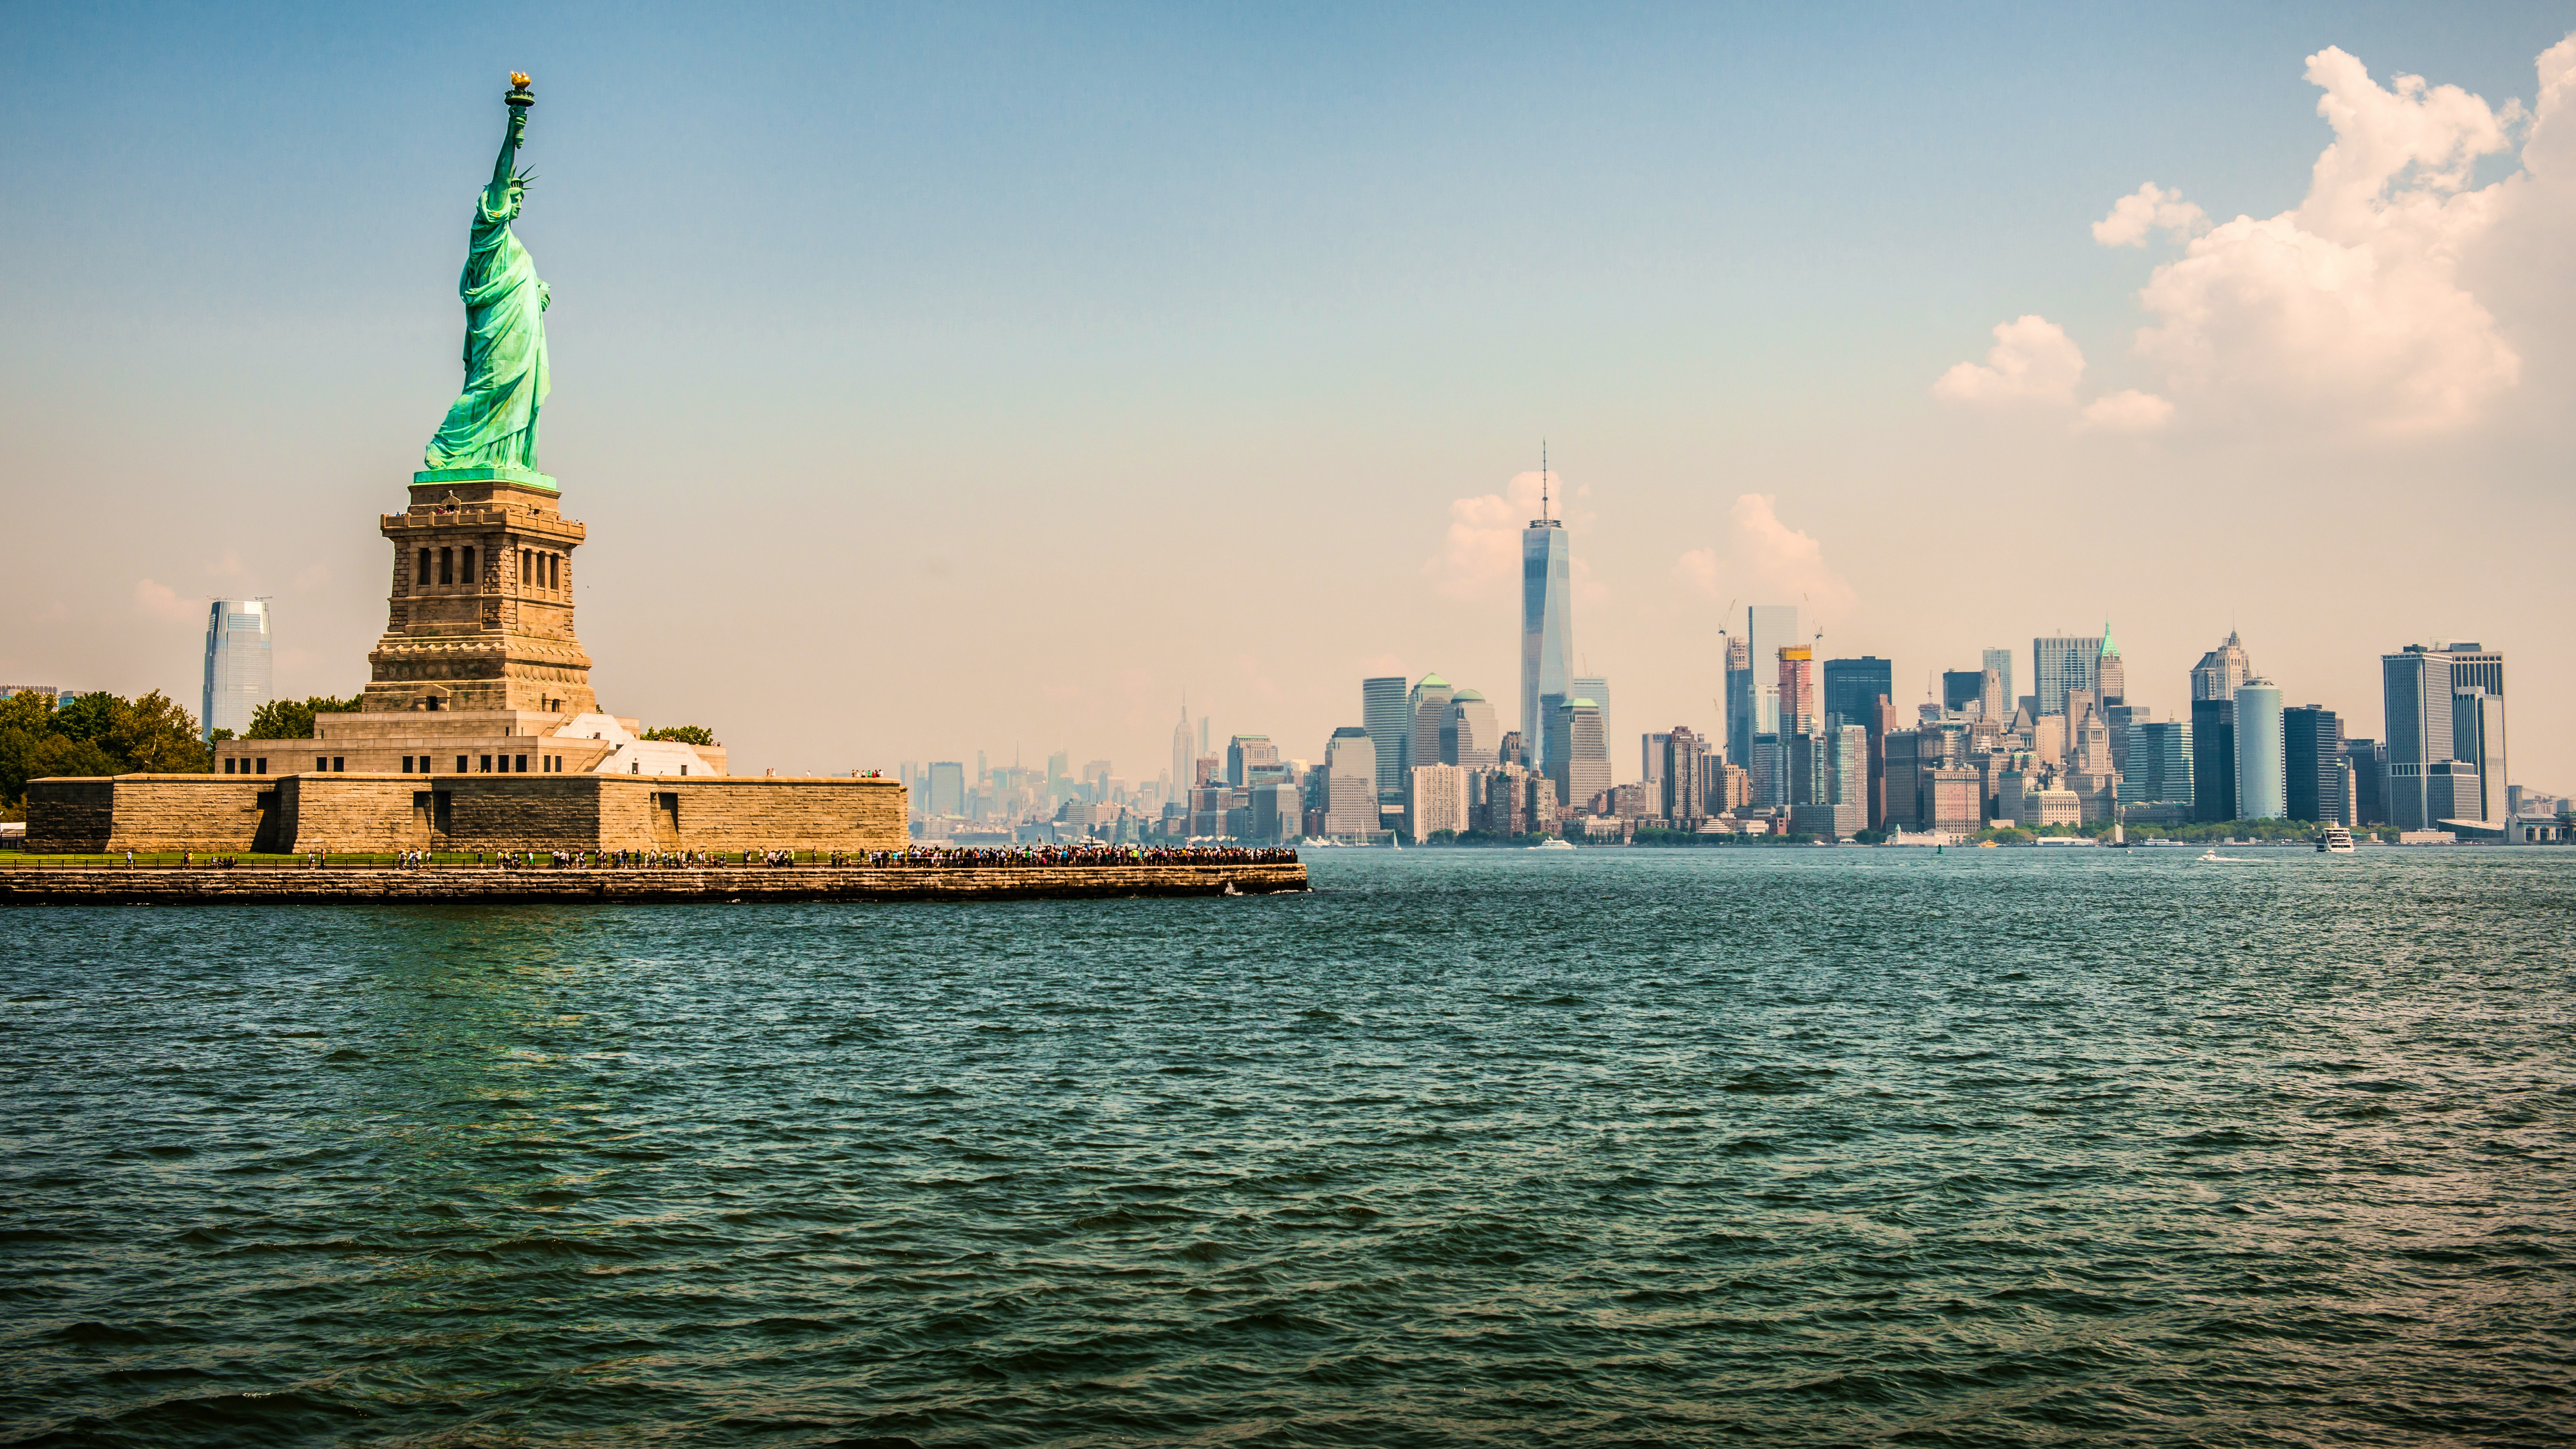 Statue of Liberty and New York skyline on the background – © mdbrockmann82 - Fotolia